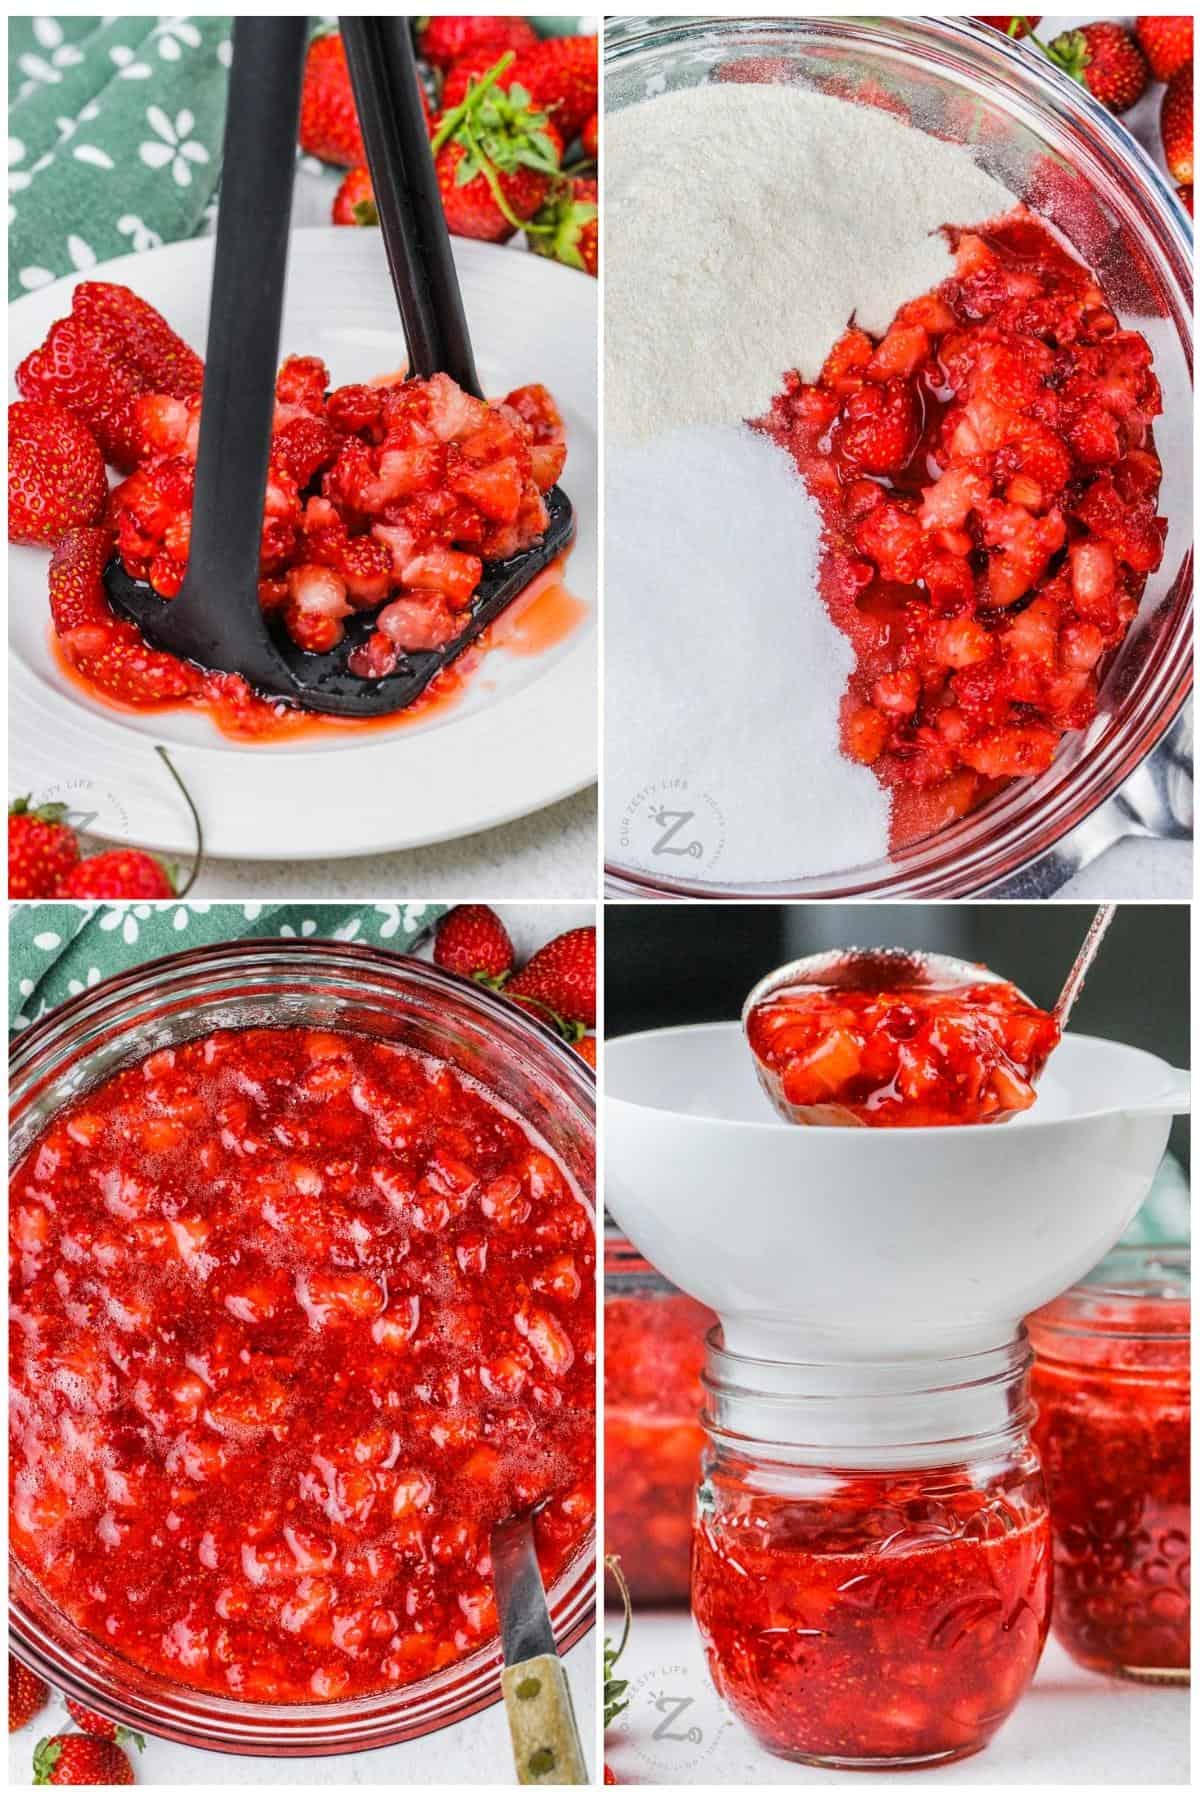 process of adding ingredients together to make Strawberry Freezer Jam Recipe